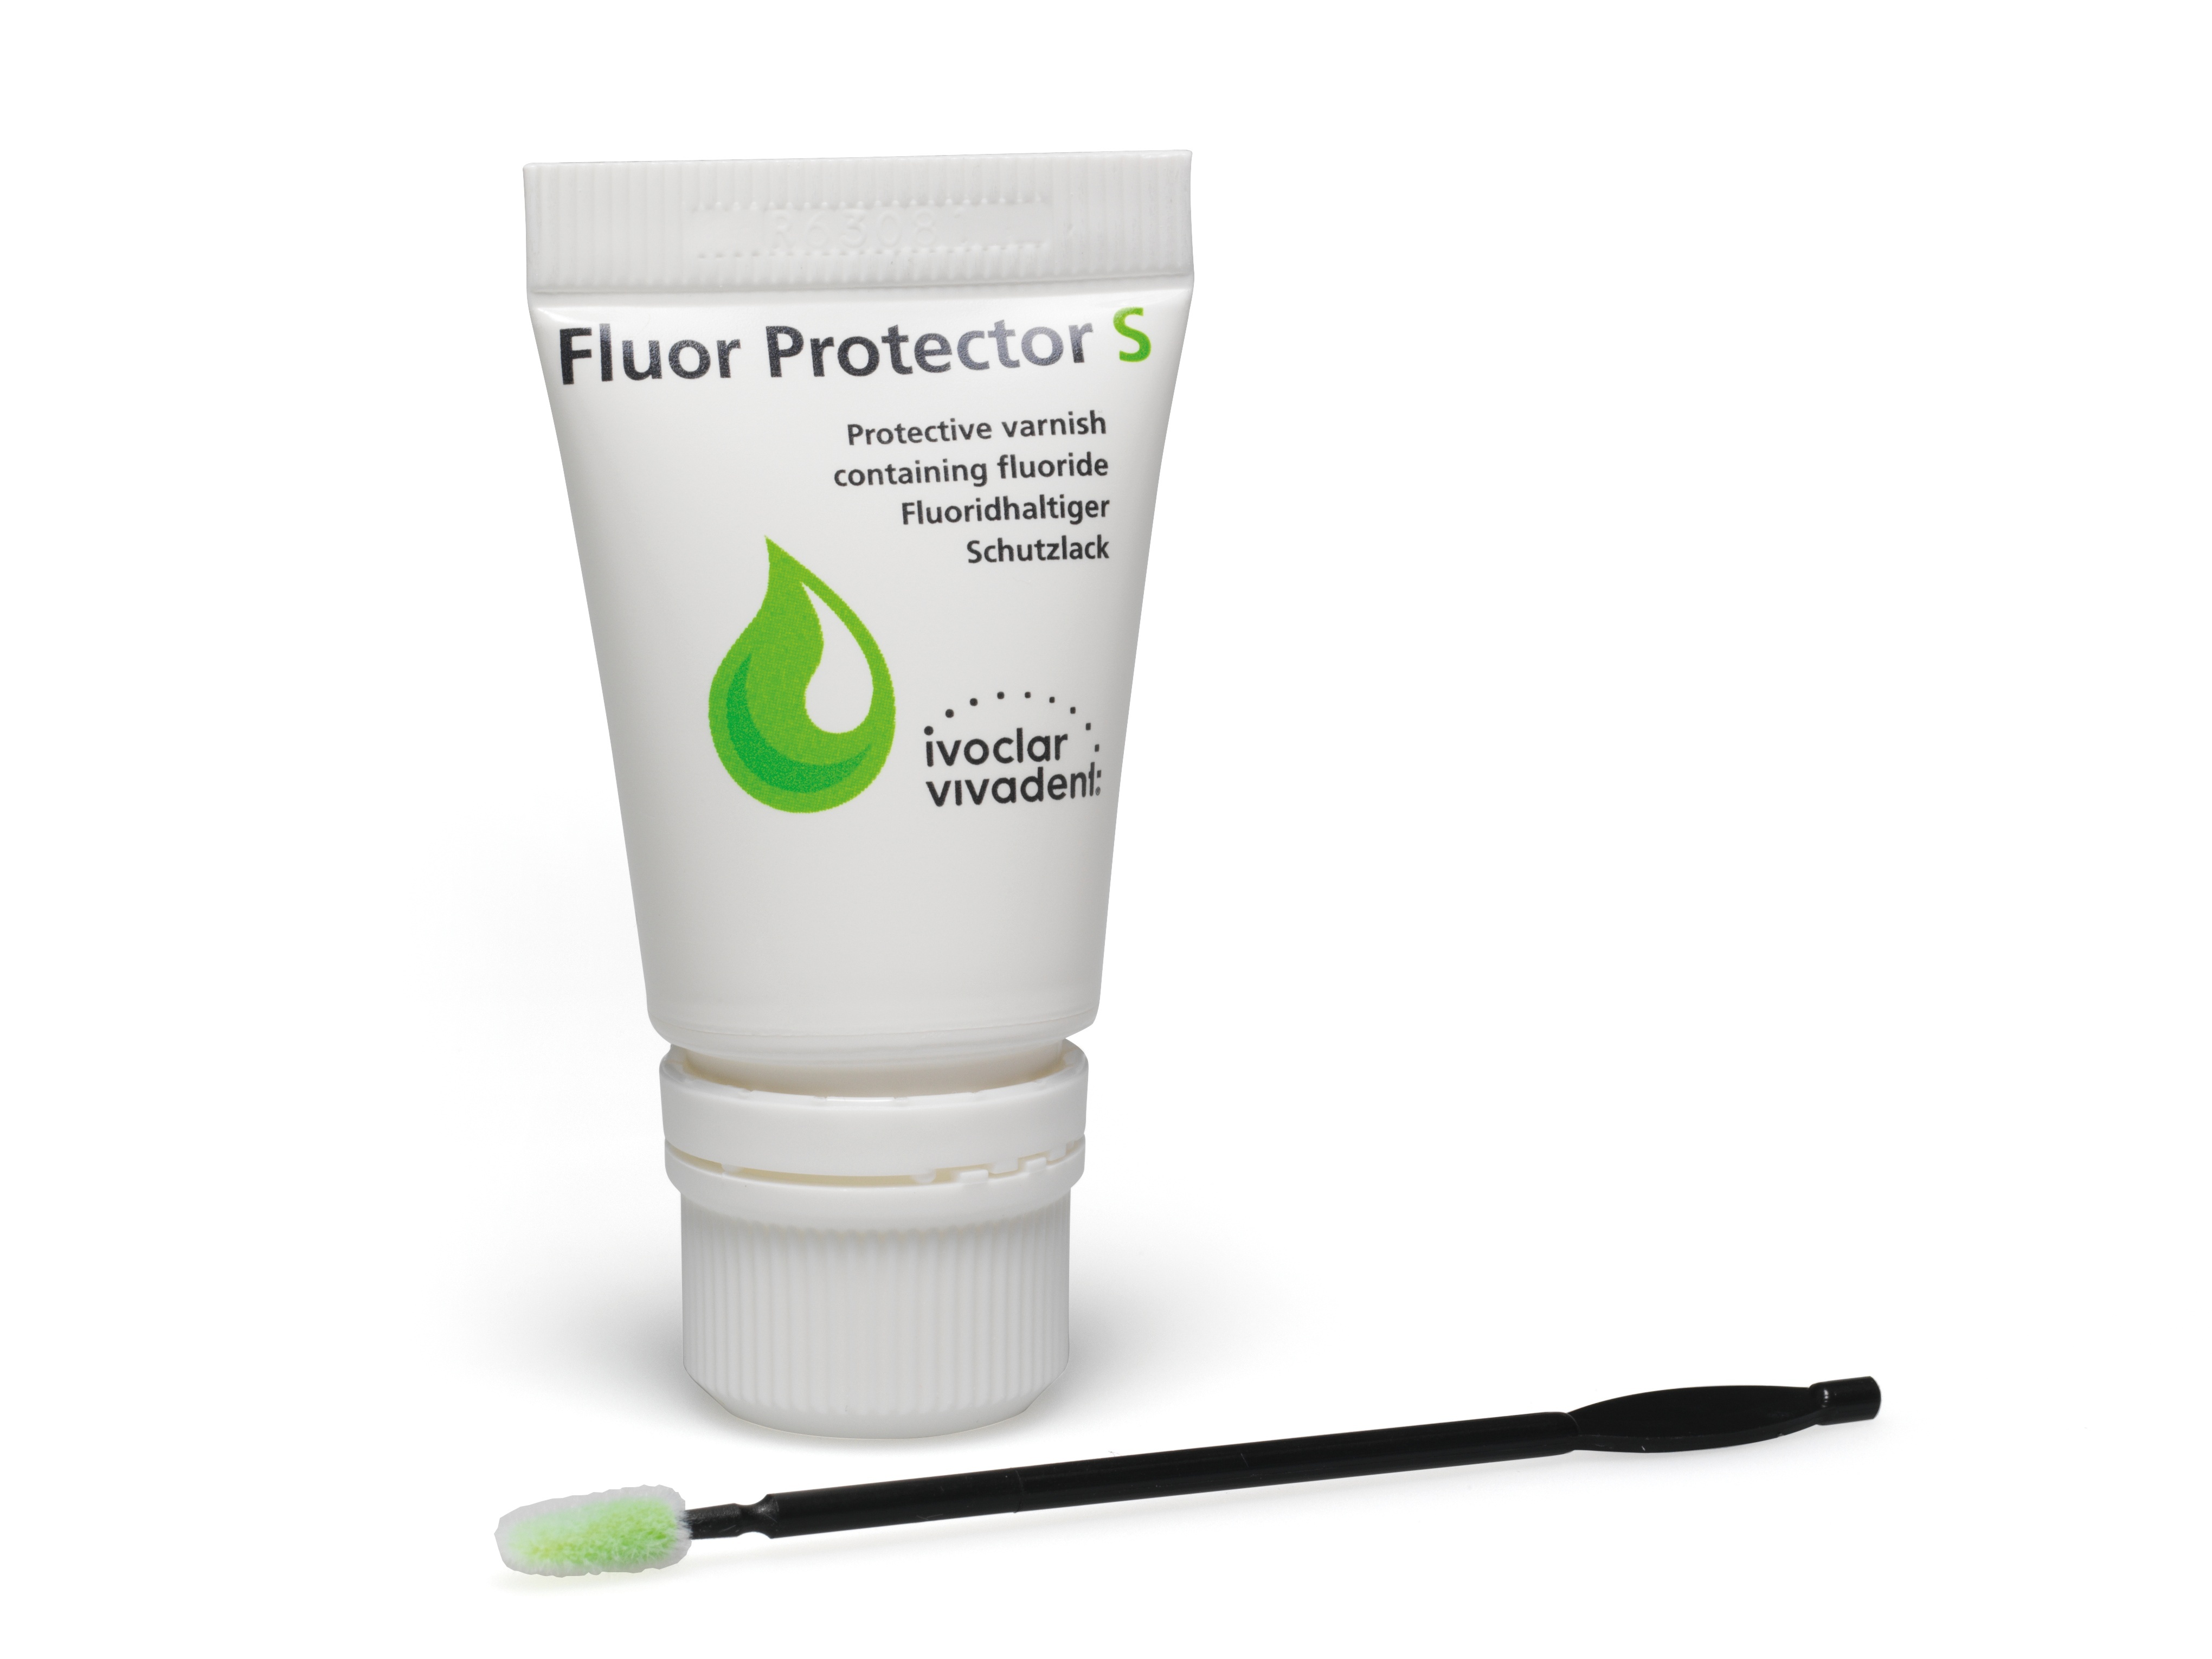 Fluor Protector S